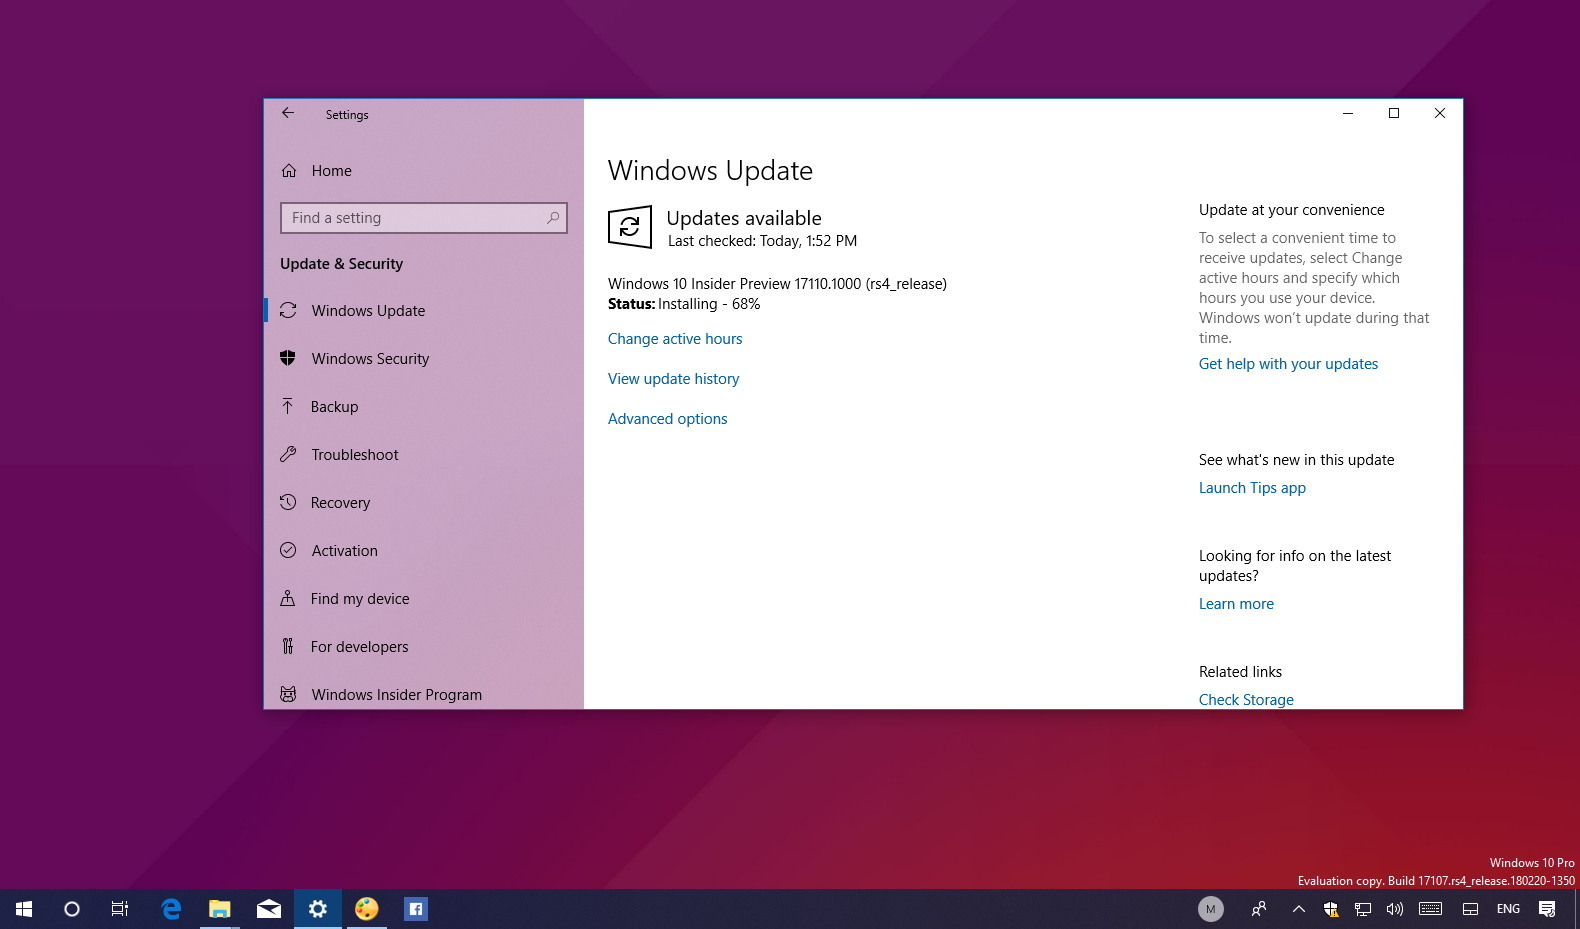 Windows 10 build 17110